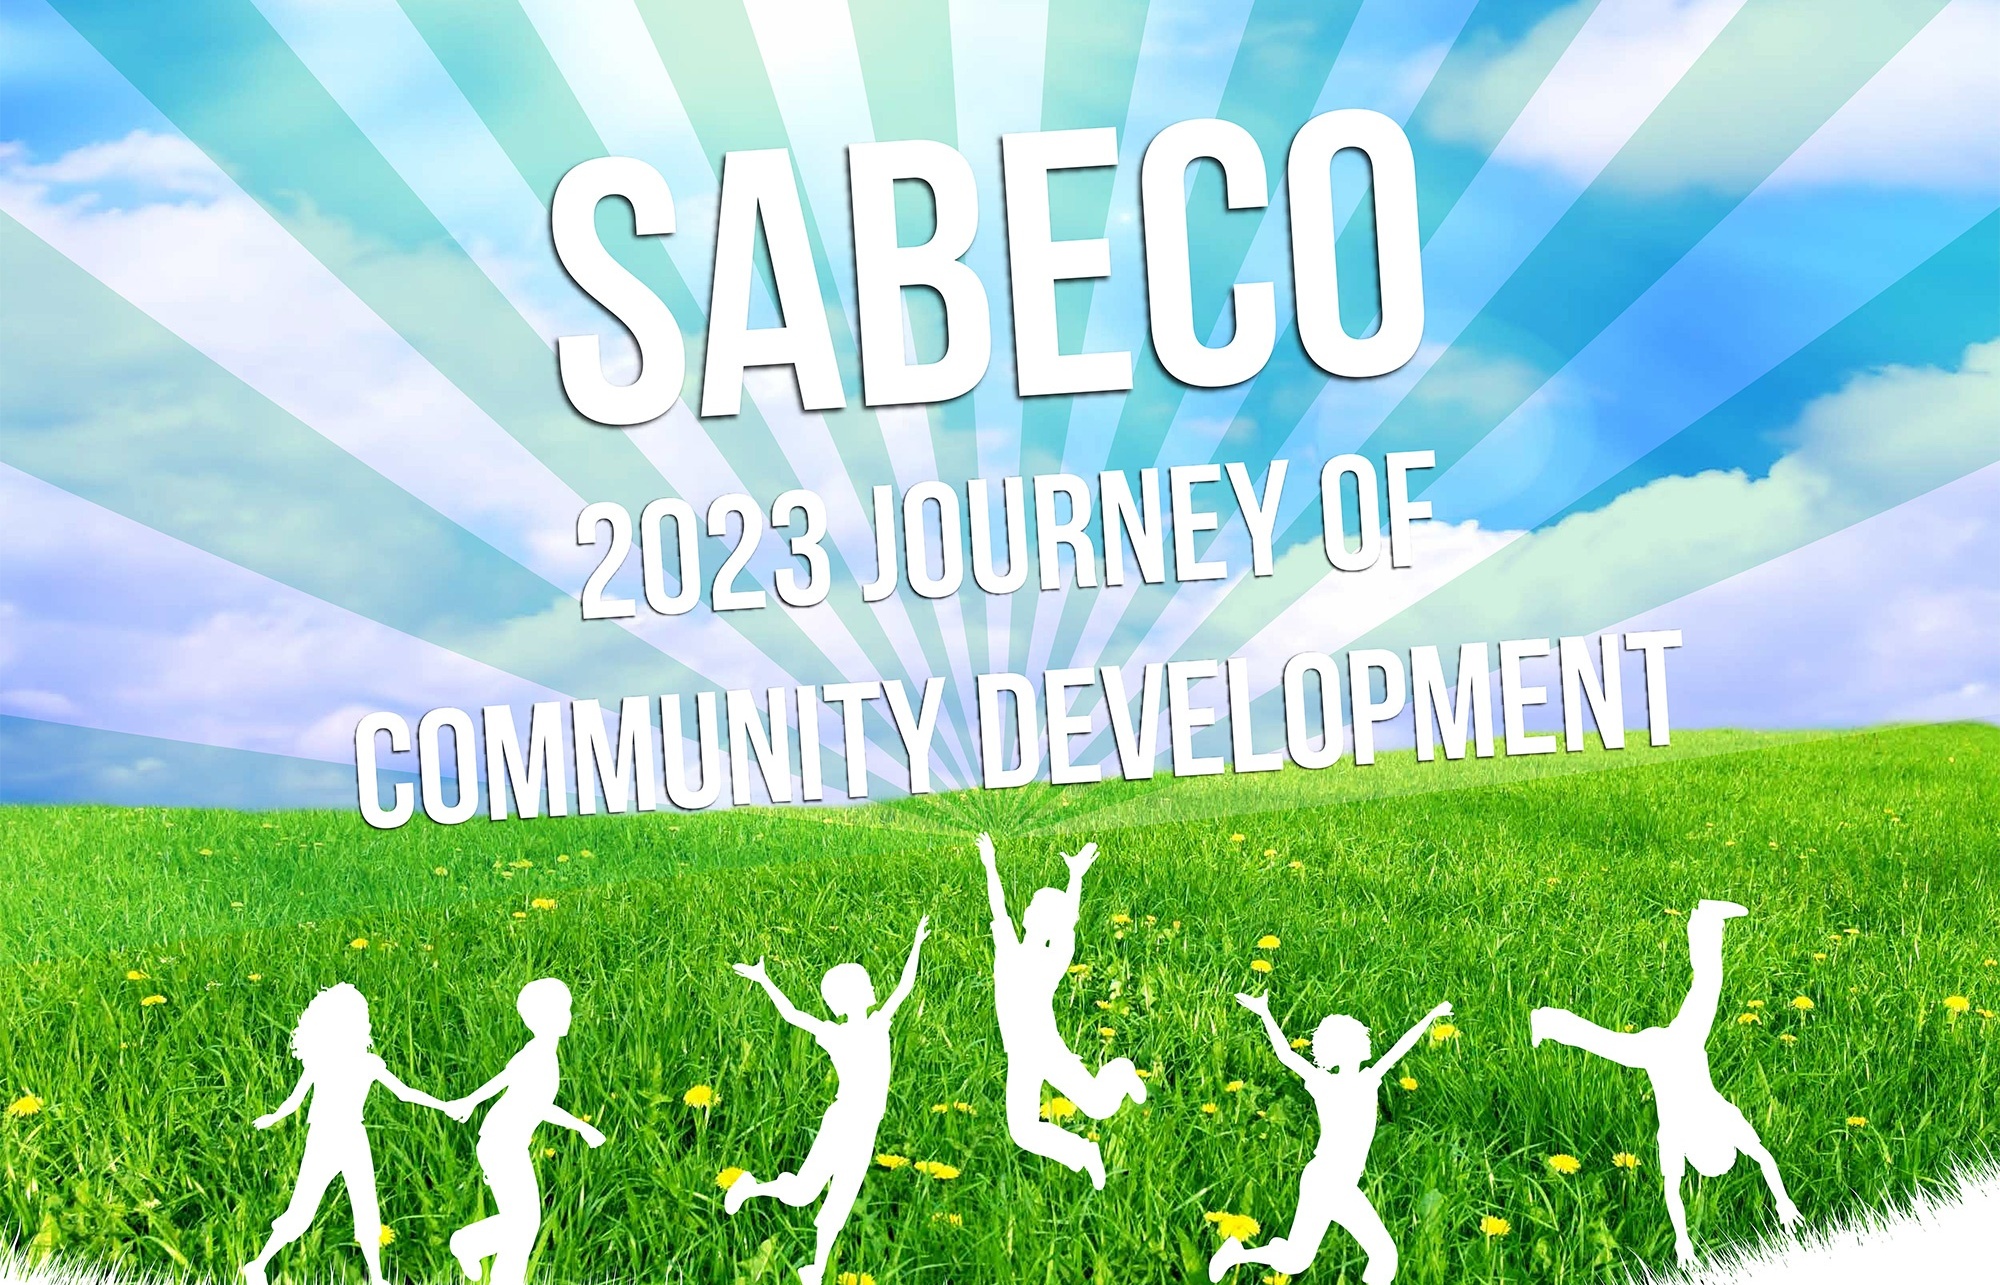 SABECO: 2023 journey of community development